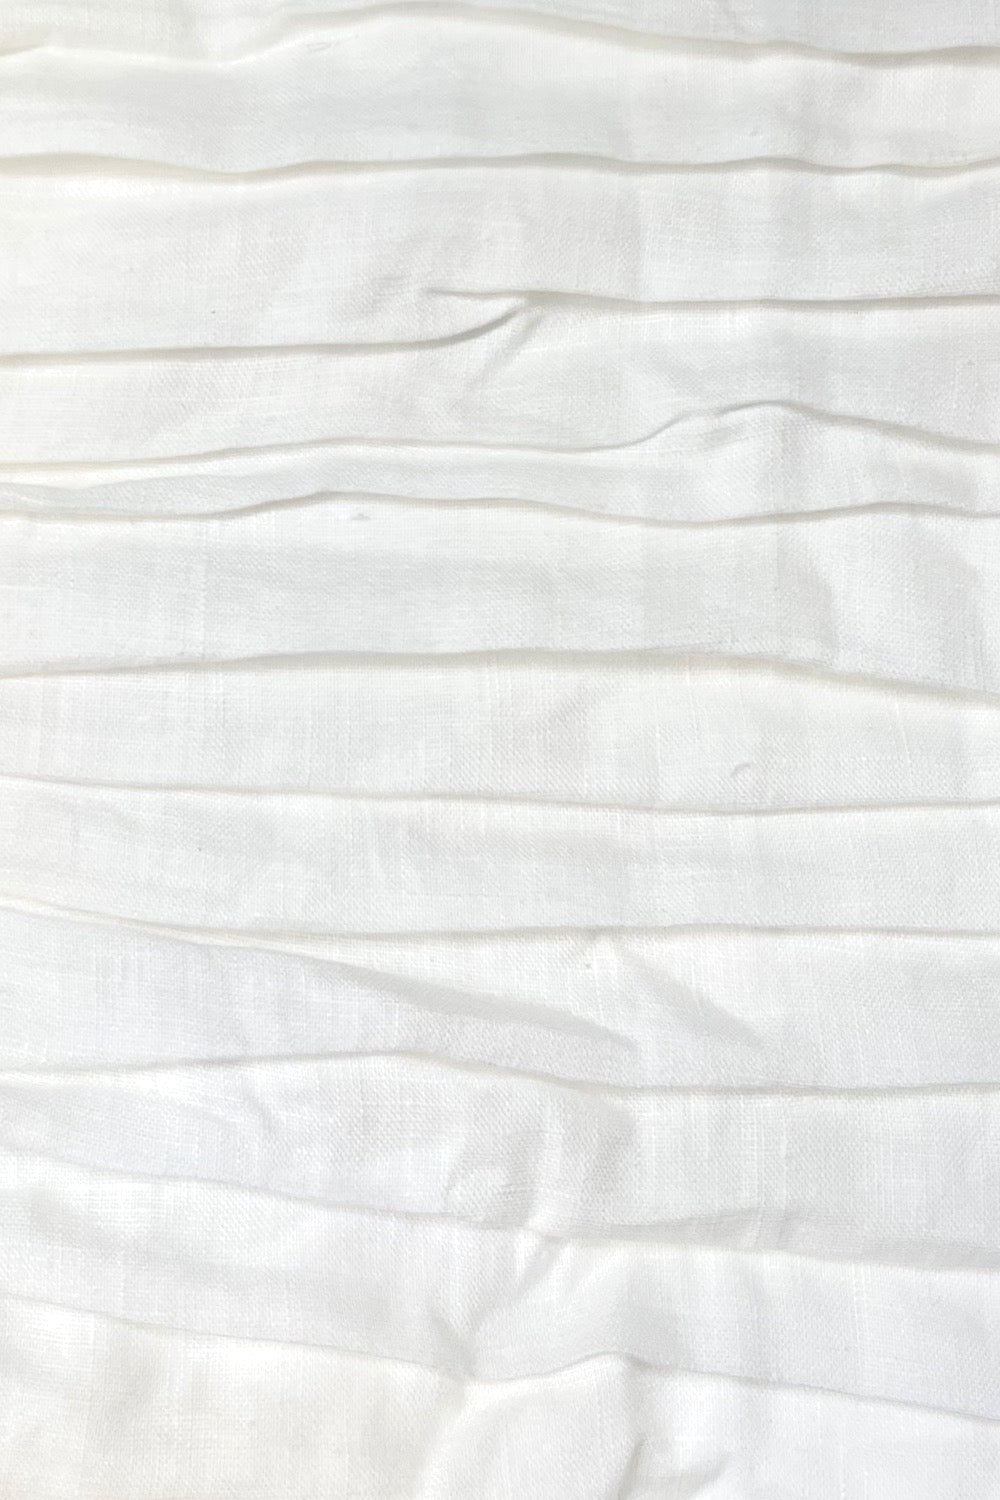 Romance Linen Corset Top White